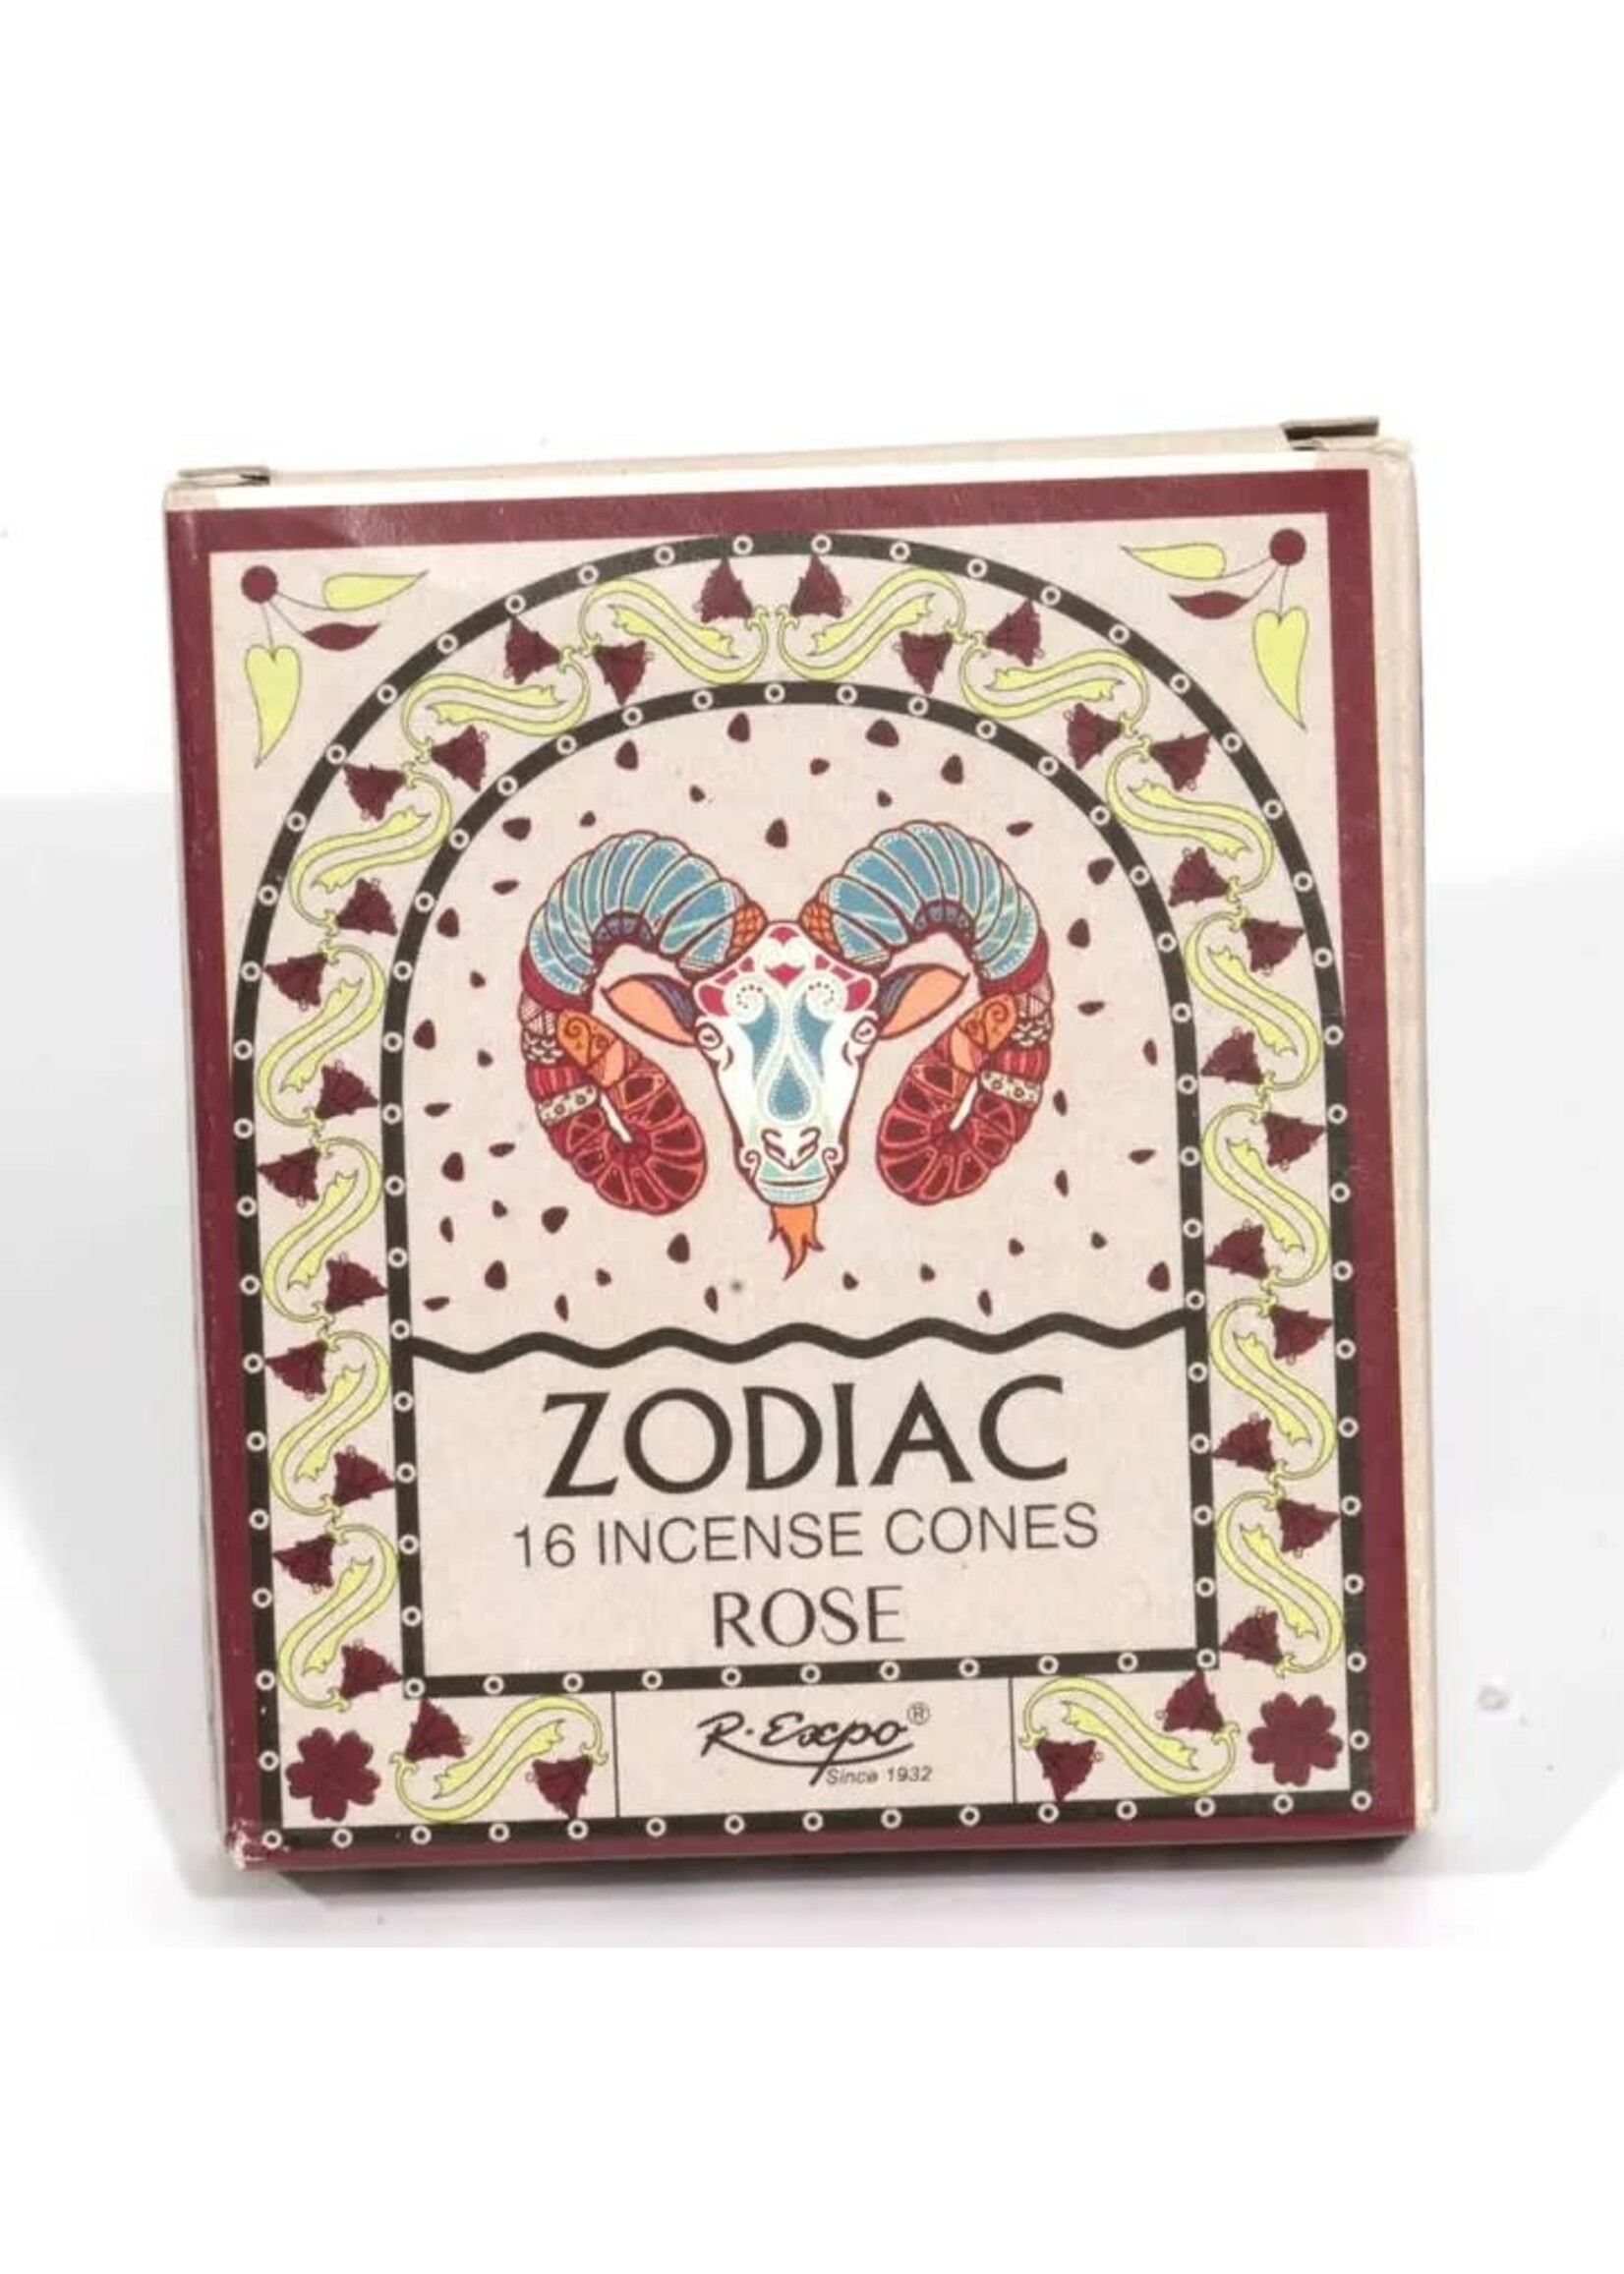 Zodiac Incense Cones Box Aries Rose